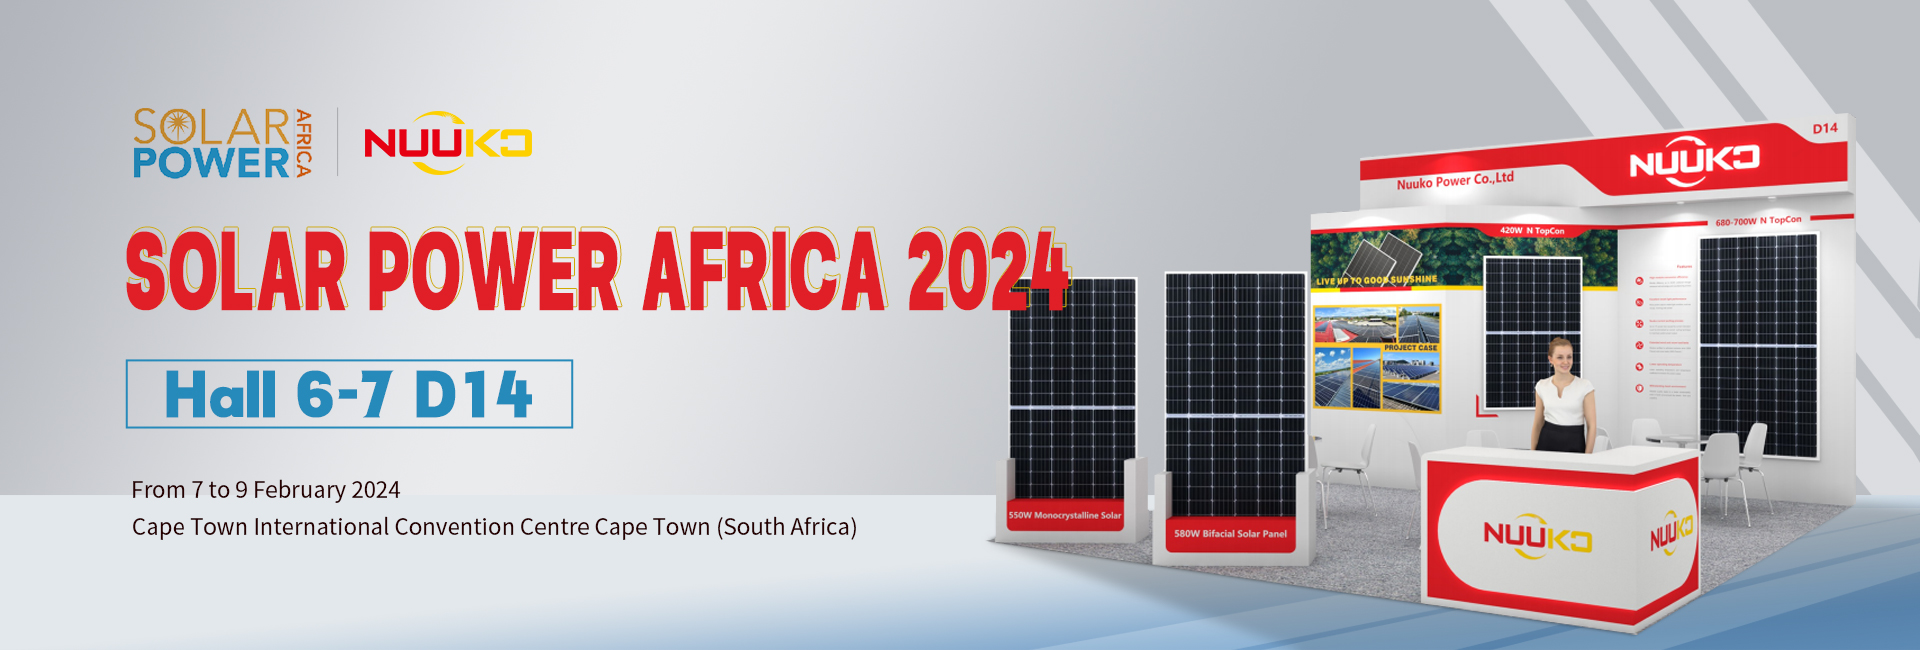 SOLAR POWER AFRICA 2024